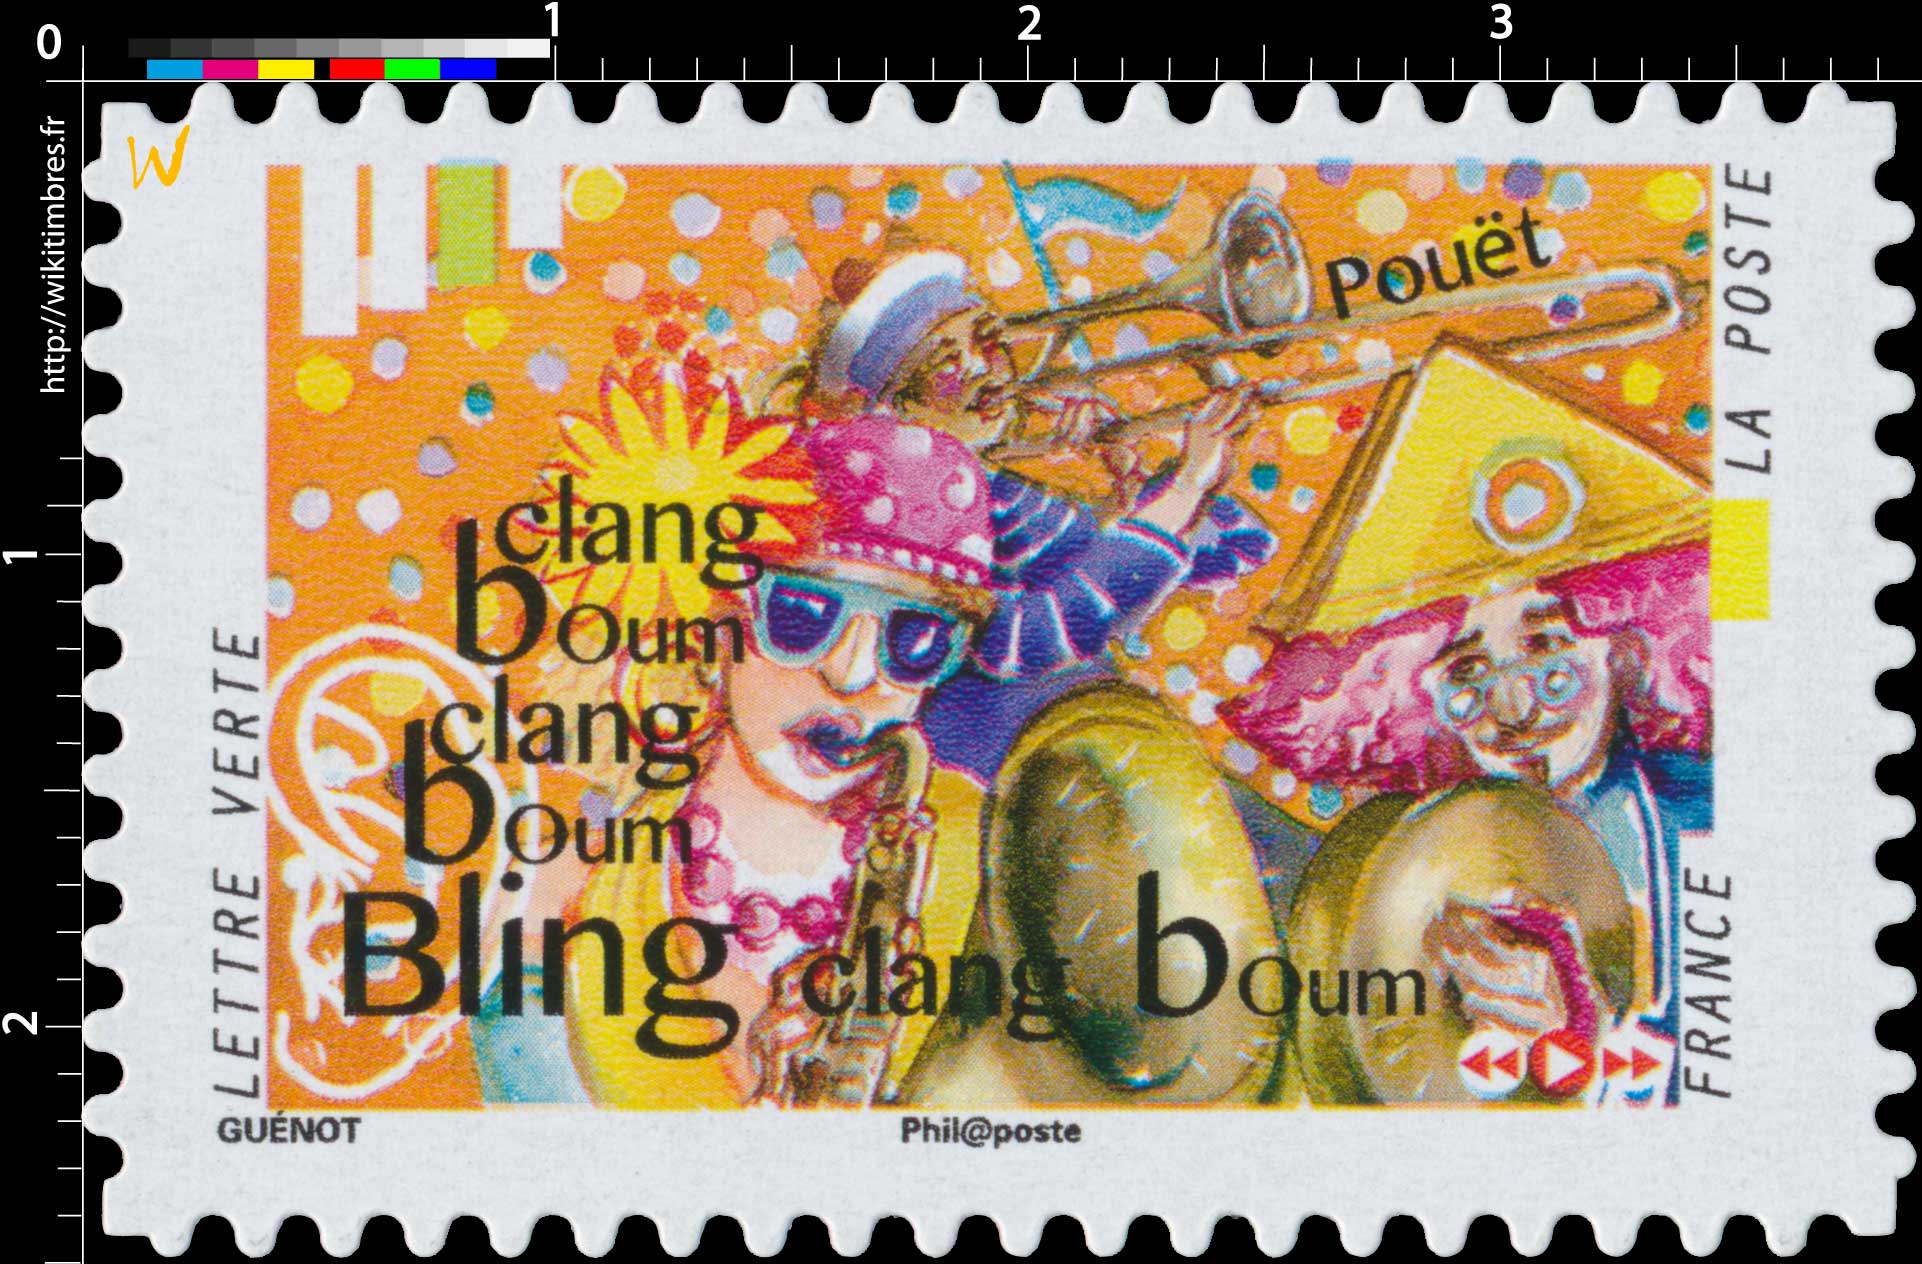 2016 Bling clang boum